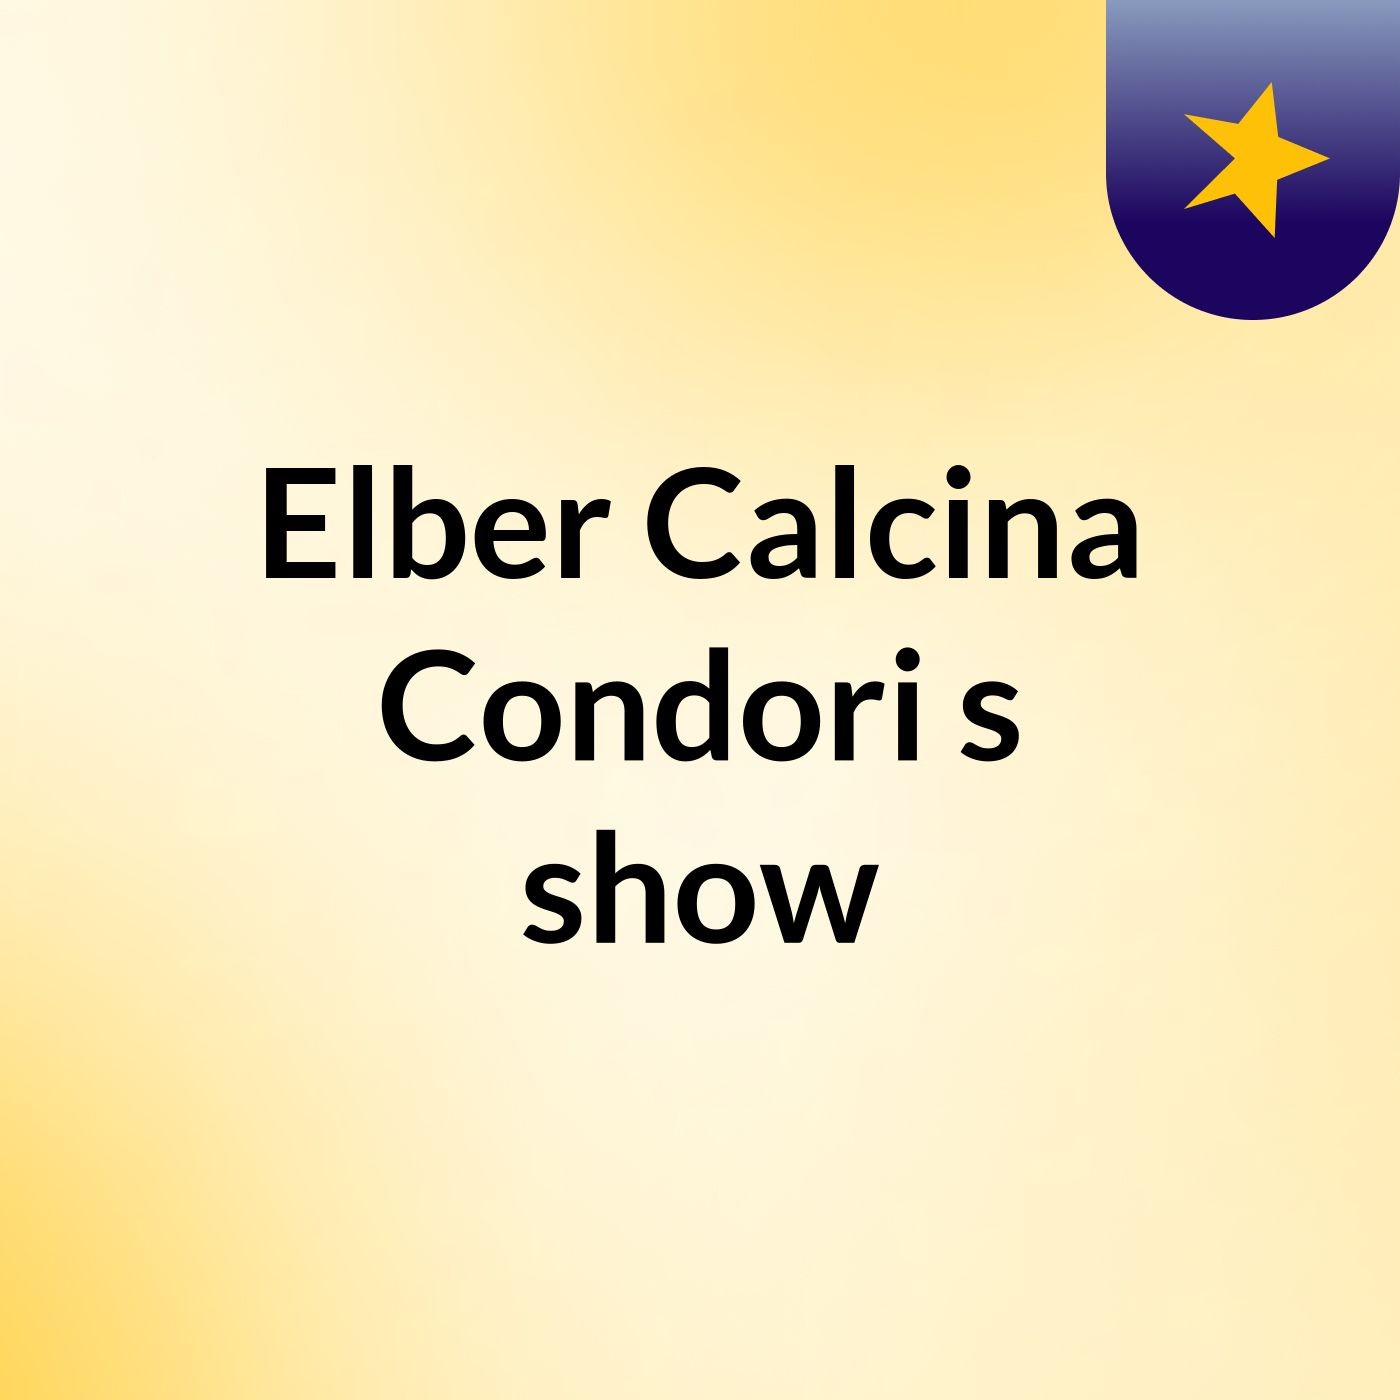 Elber Calcina Condori's show